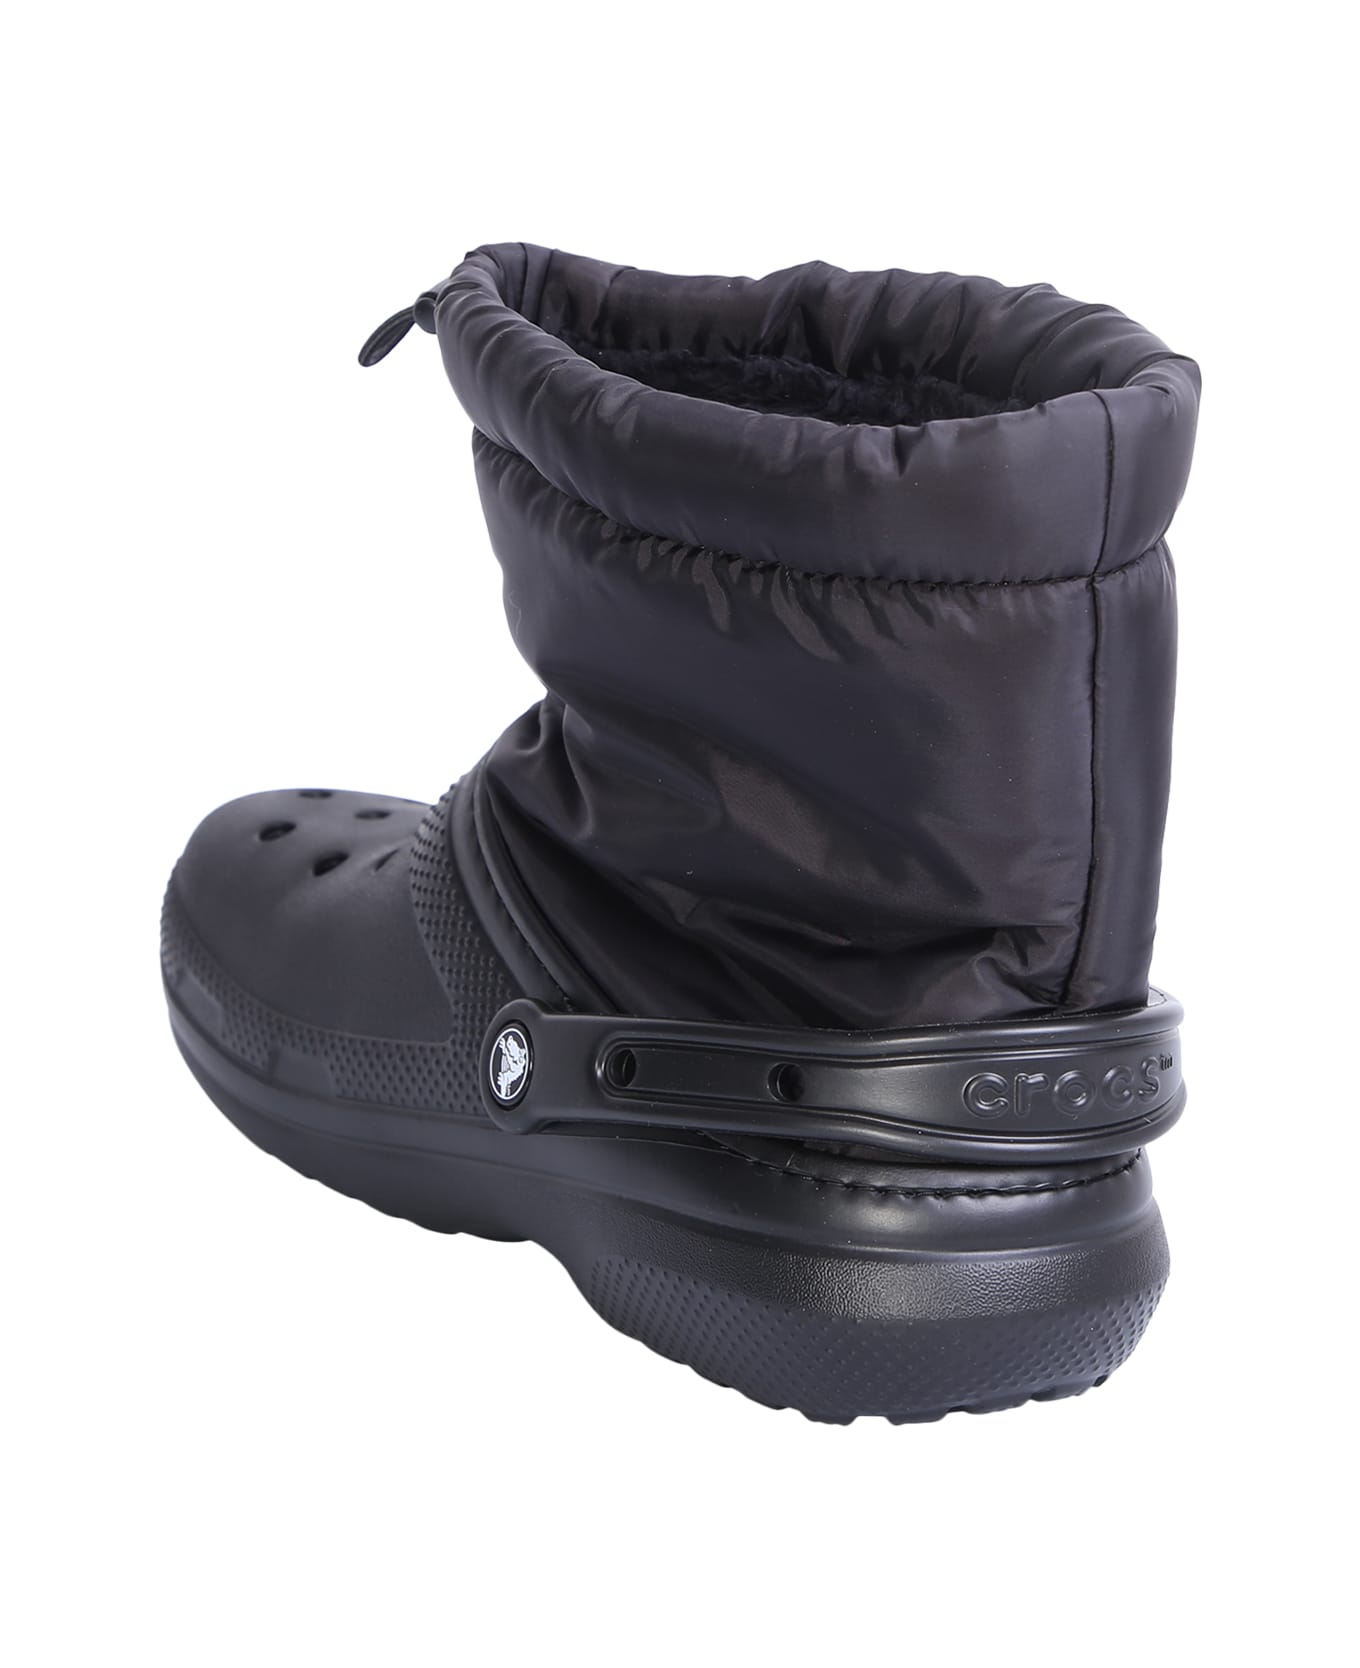 Crocs Classic Neo Puff Boots In Black - Black ブーツ